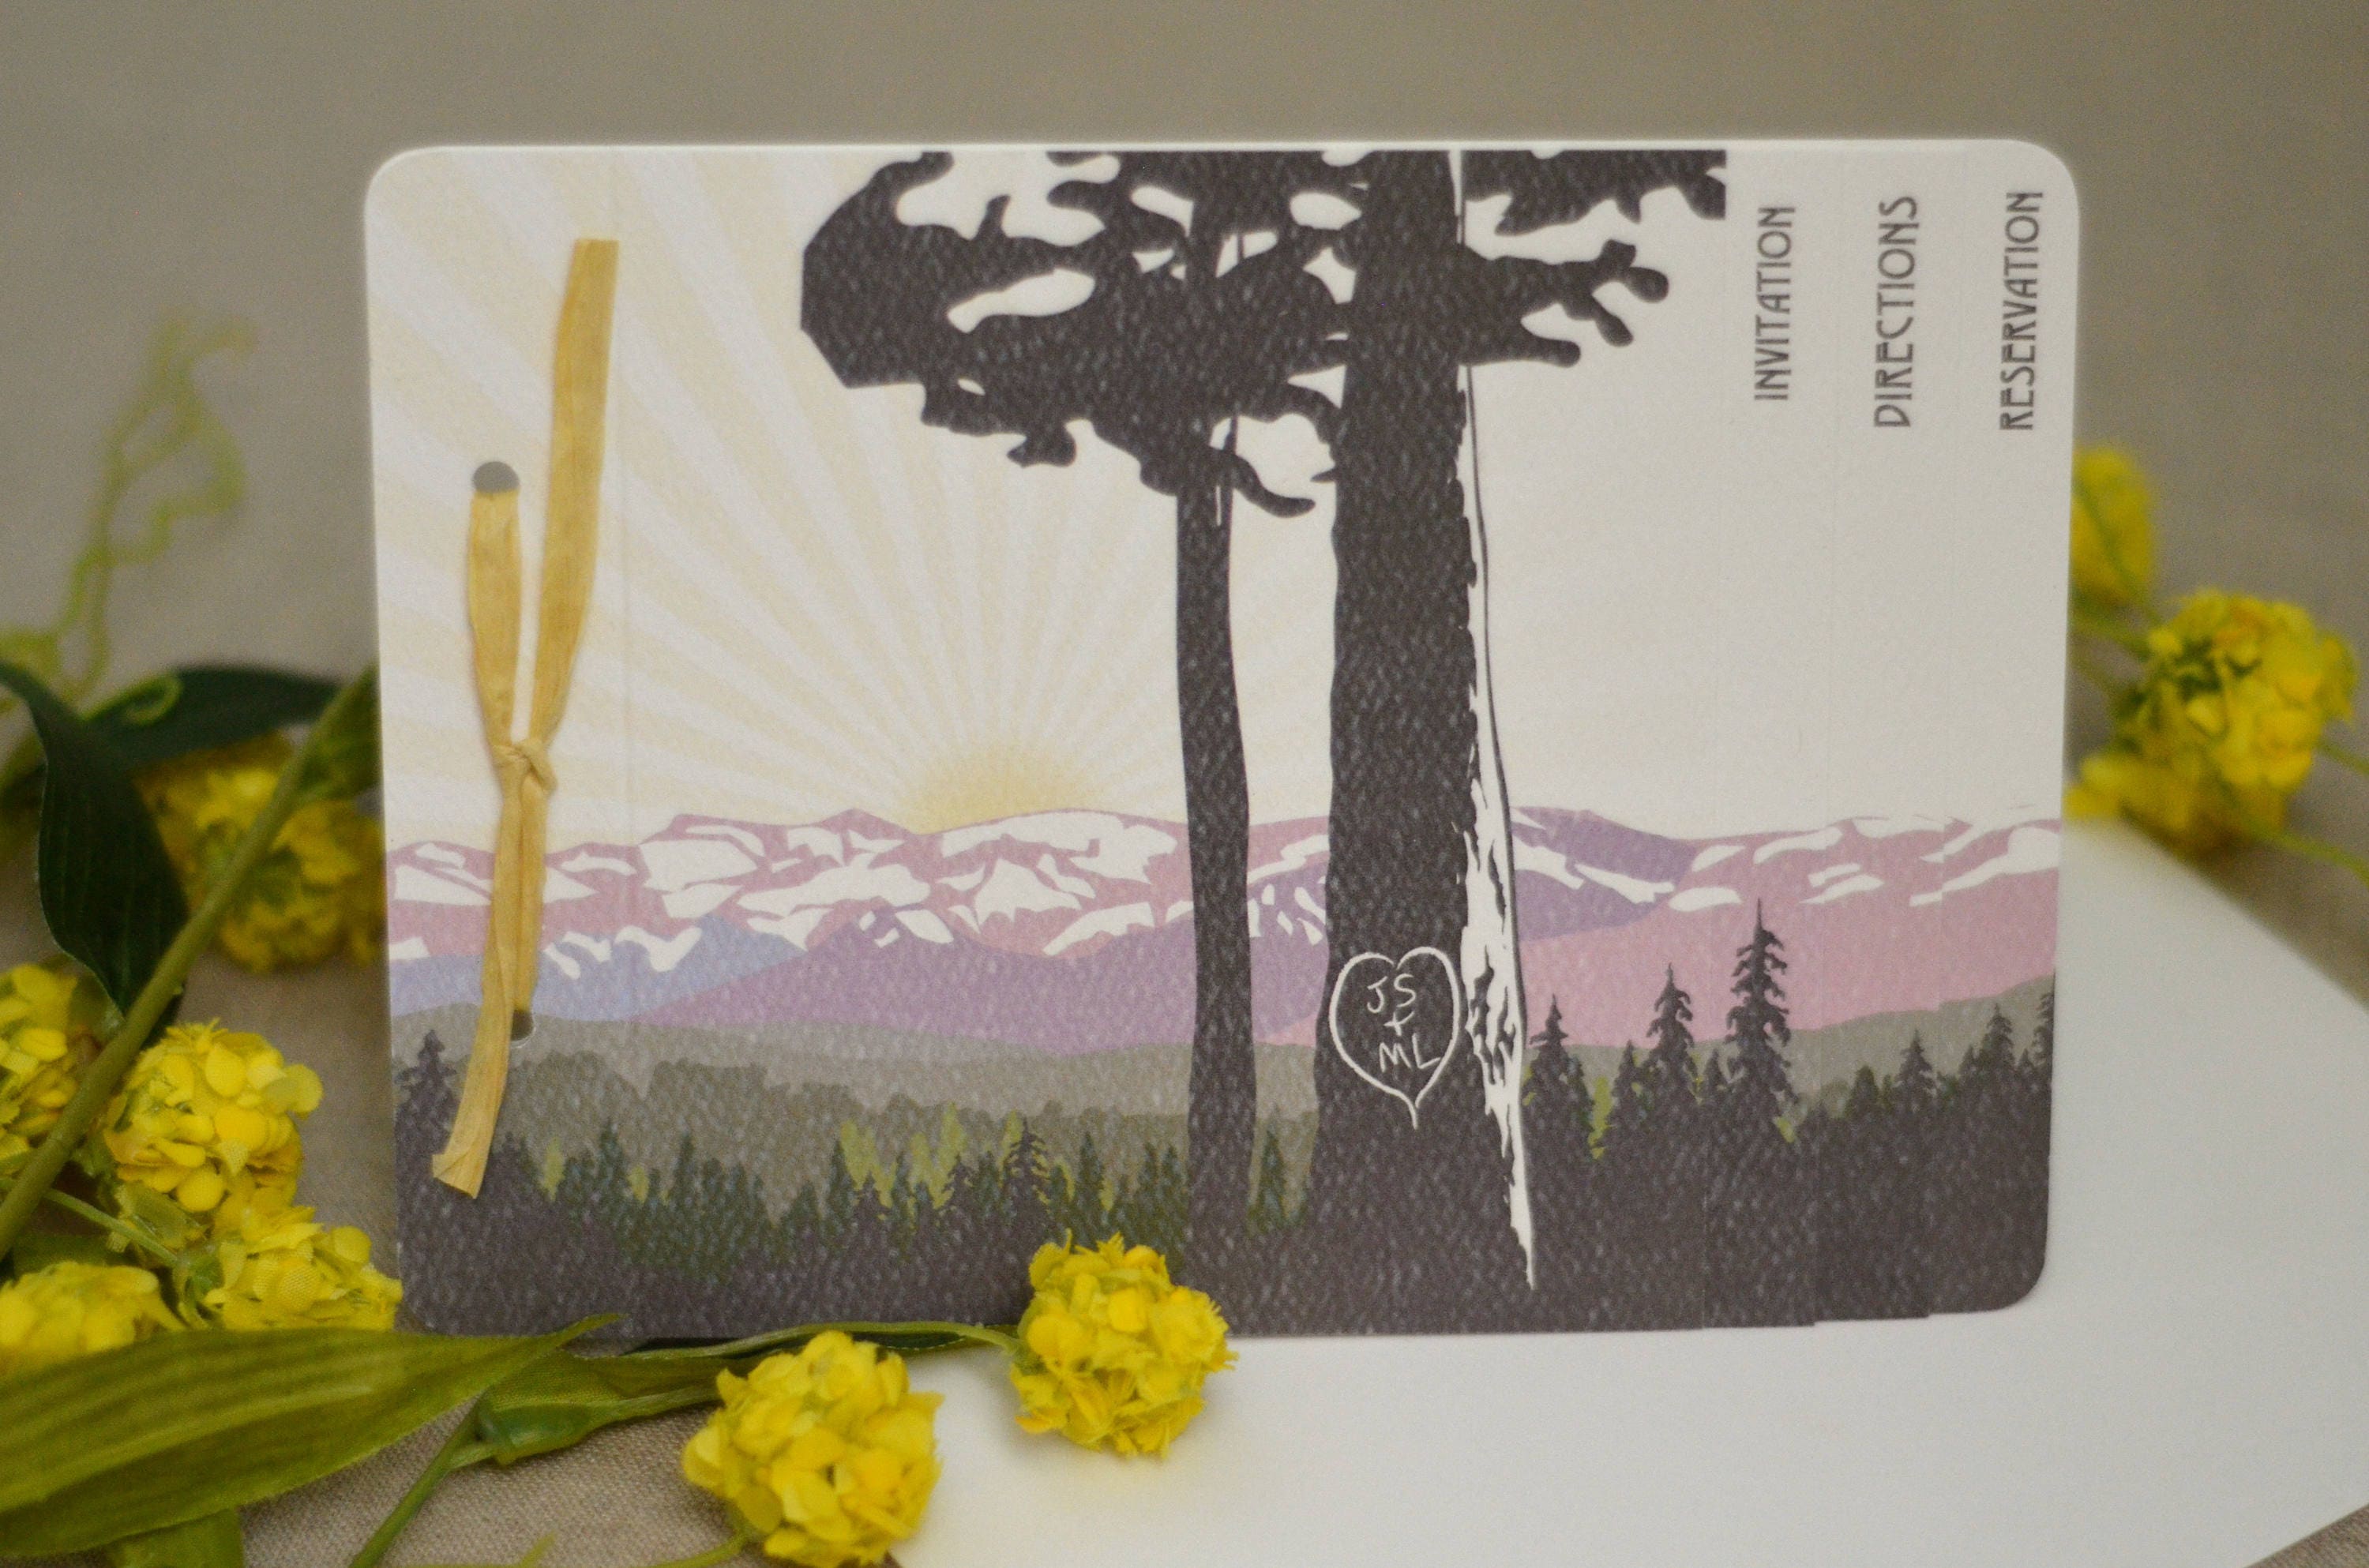 Lake Tahoe Landscape with Purple Mountain Range Sunset // 4pg Livret Wedding Invitation Booklet Style with Postcard RSVP // BP1